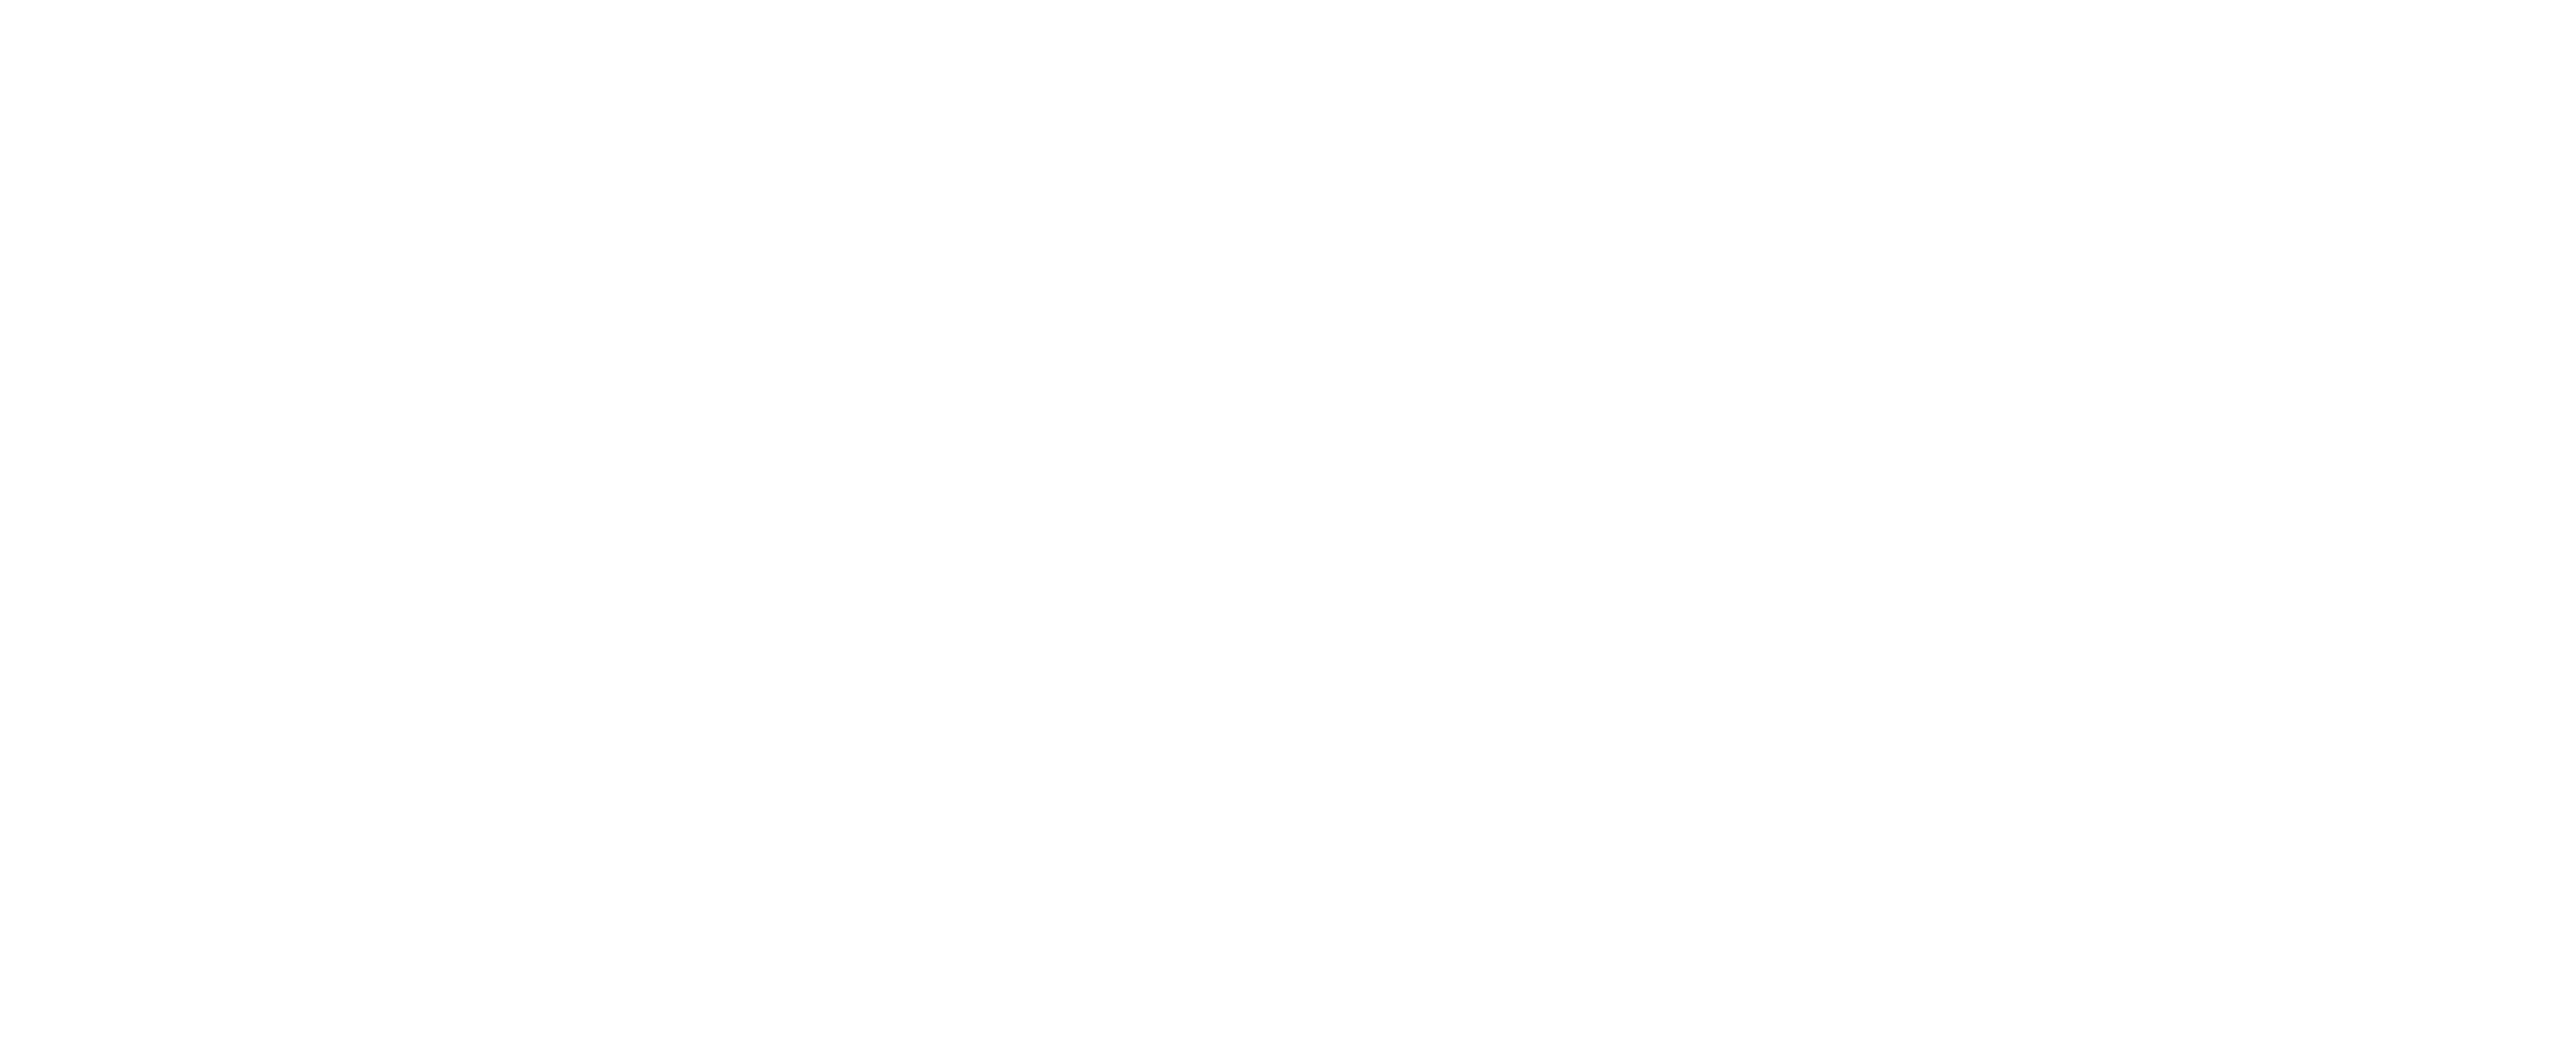 Healthmart RX